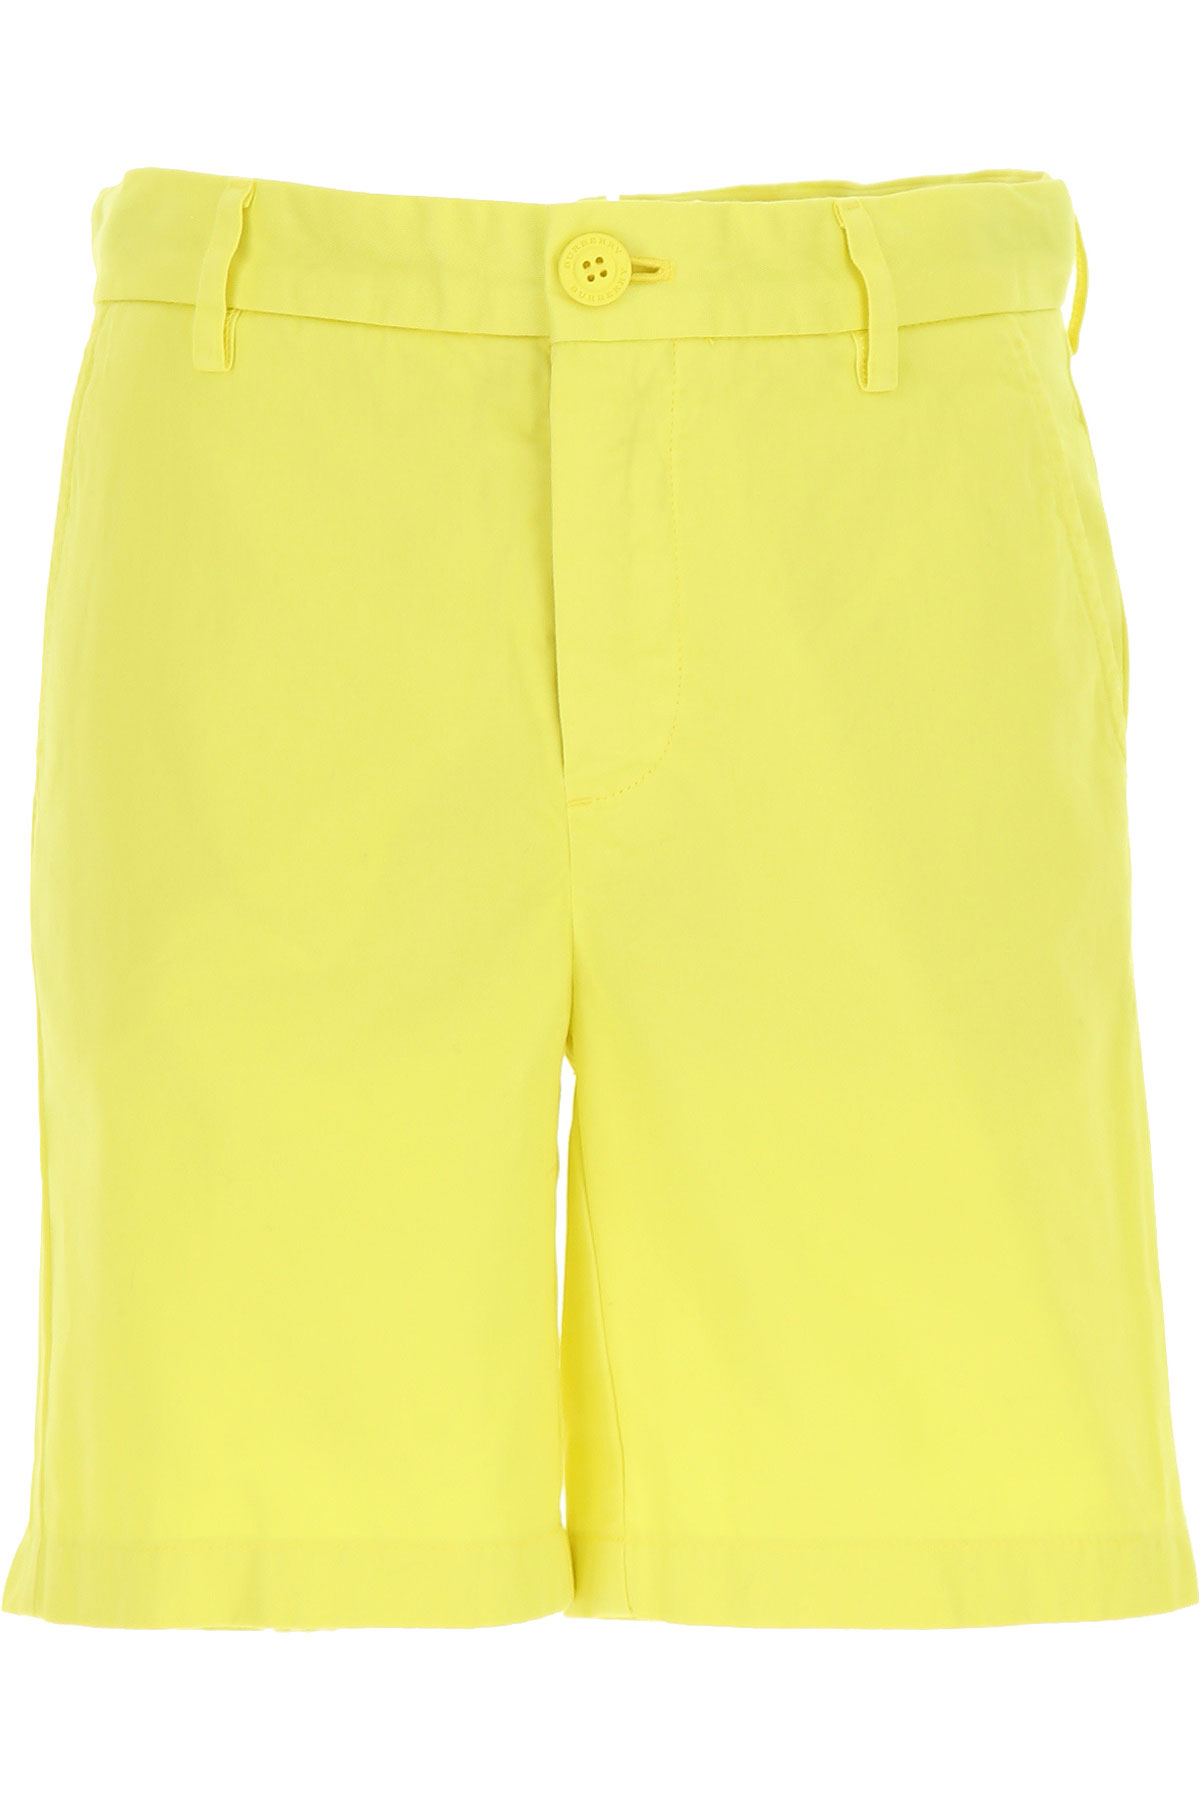 burberry shorts kids yellow